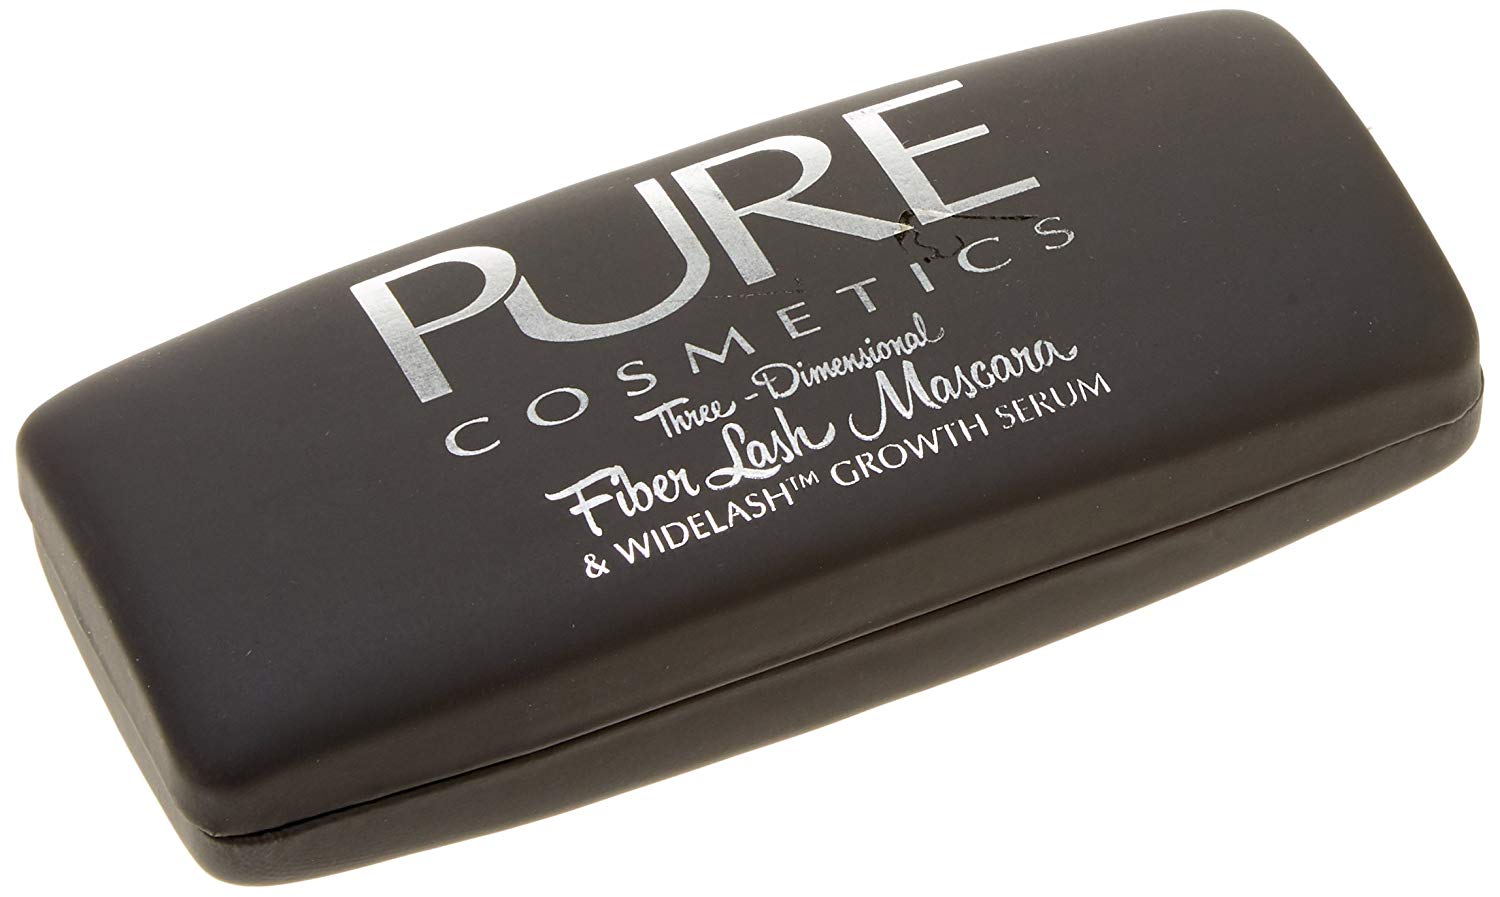 Pure Cosmetics 3D Fiber Lash Mascara with Widelash Growth Serum - ADDROS.COM